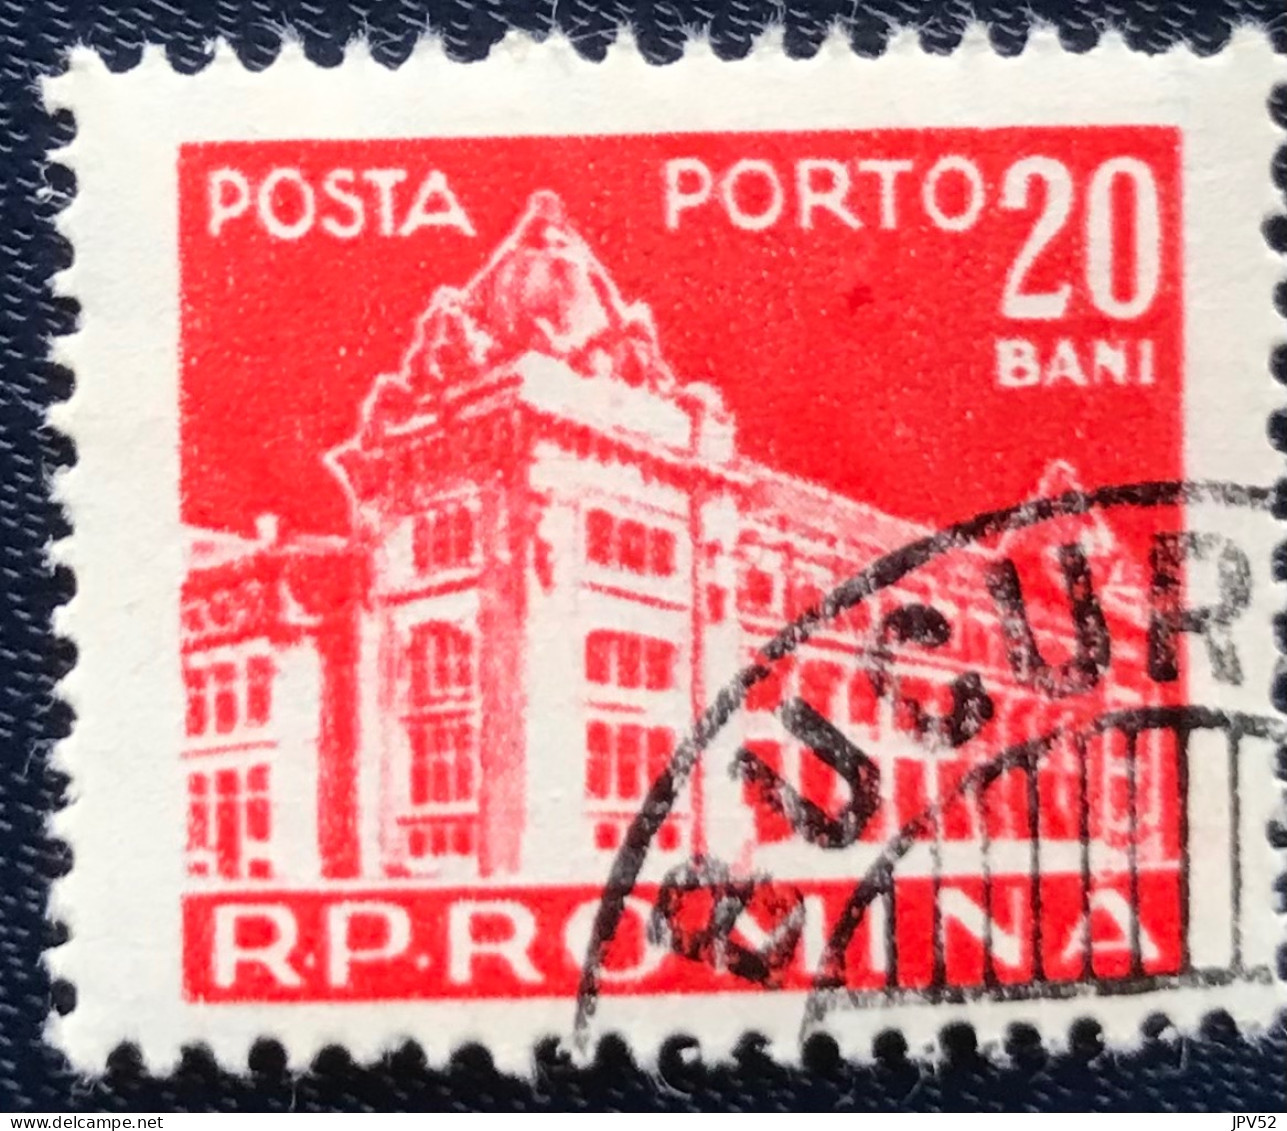 Romana - Roemenië - C14/54 - 1957 - (°)used - Michel 104 - Postkantoor - Port Dû (Taxe)